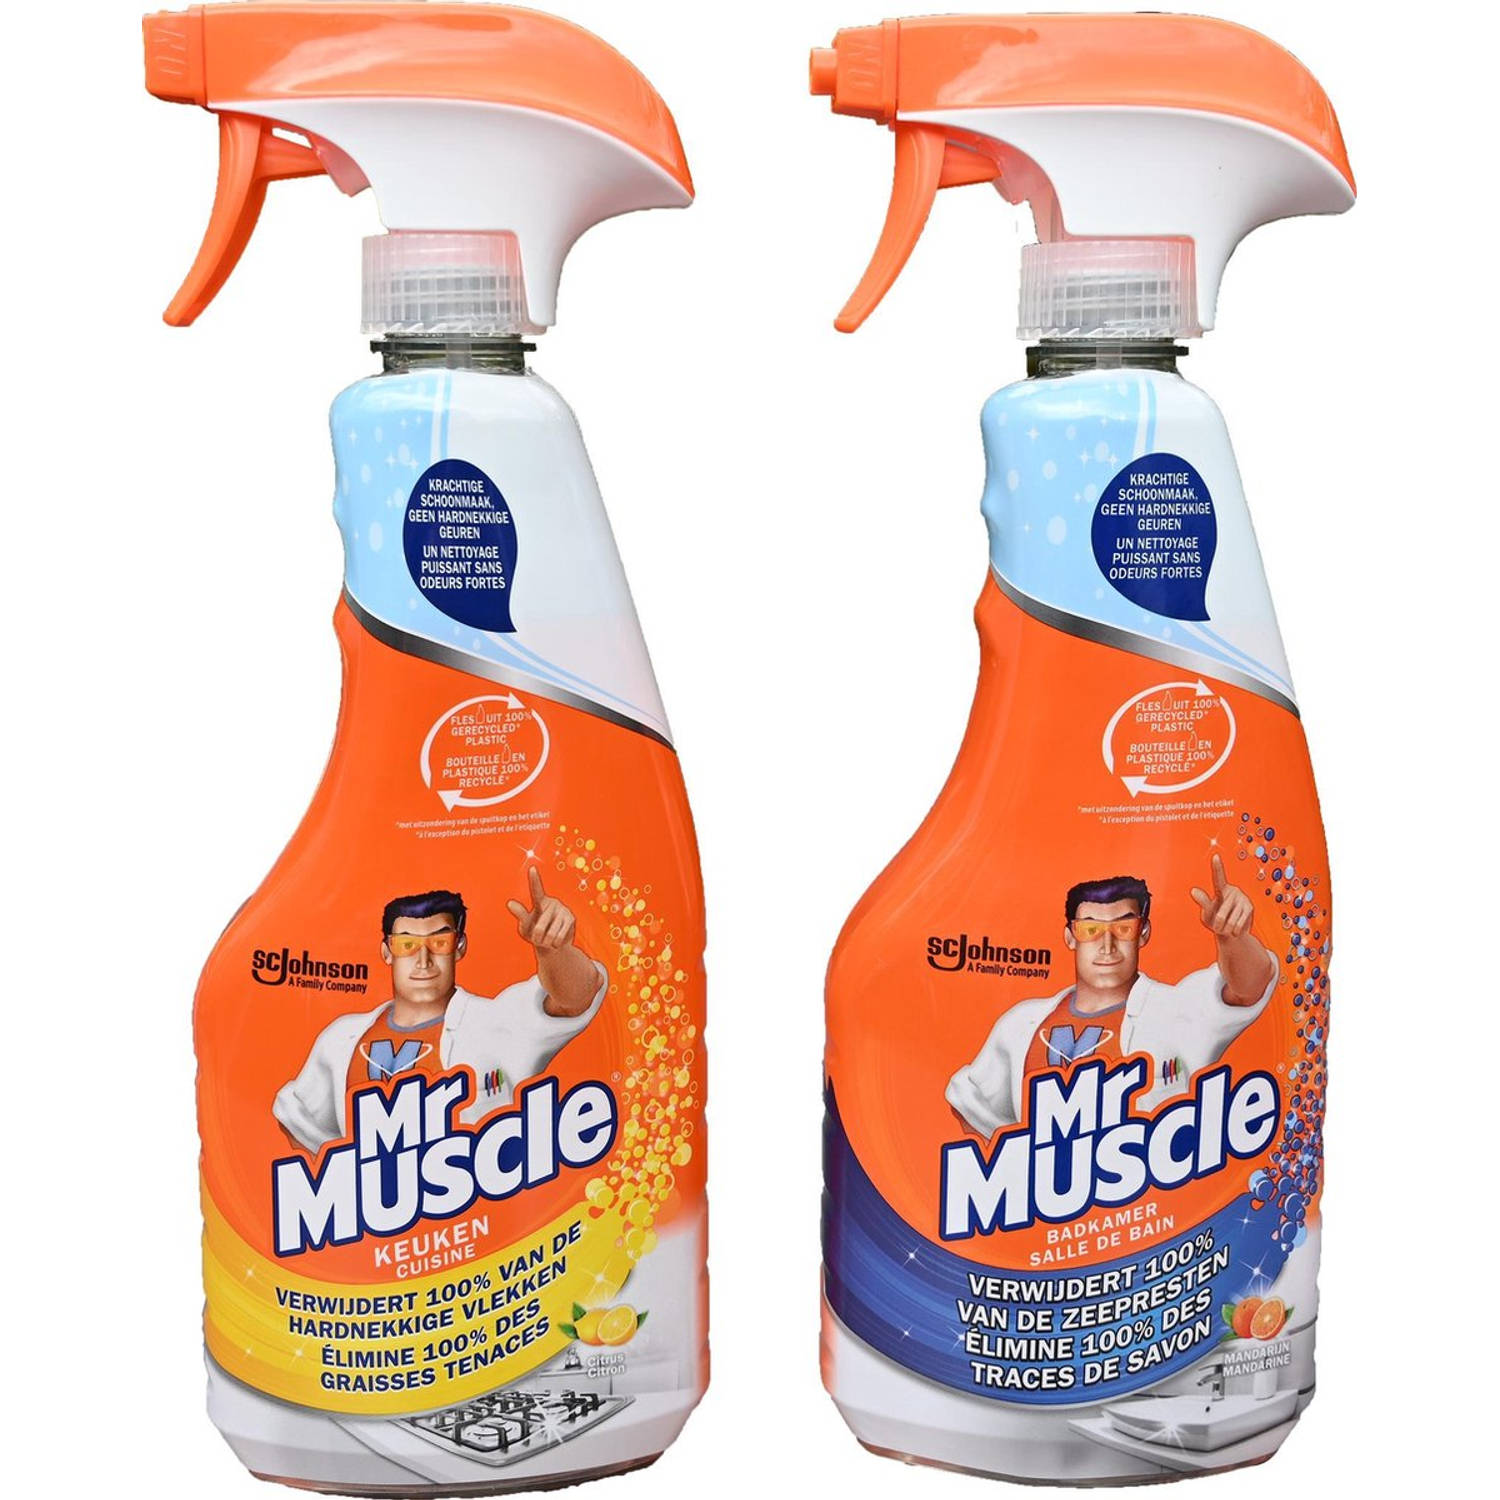 Mr Muscle badkamer reiniger spray + Mr Muscle keuken reiniger spray